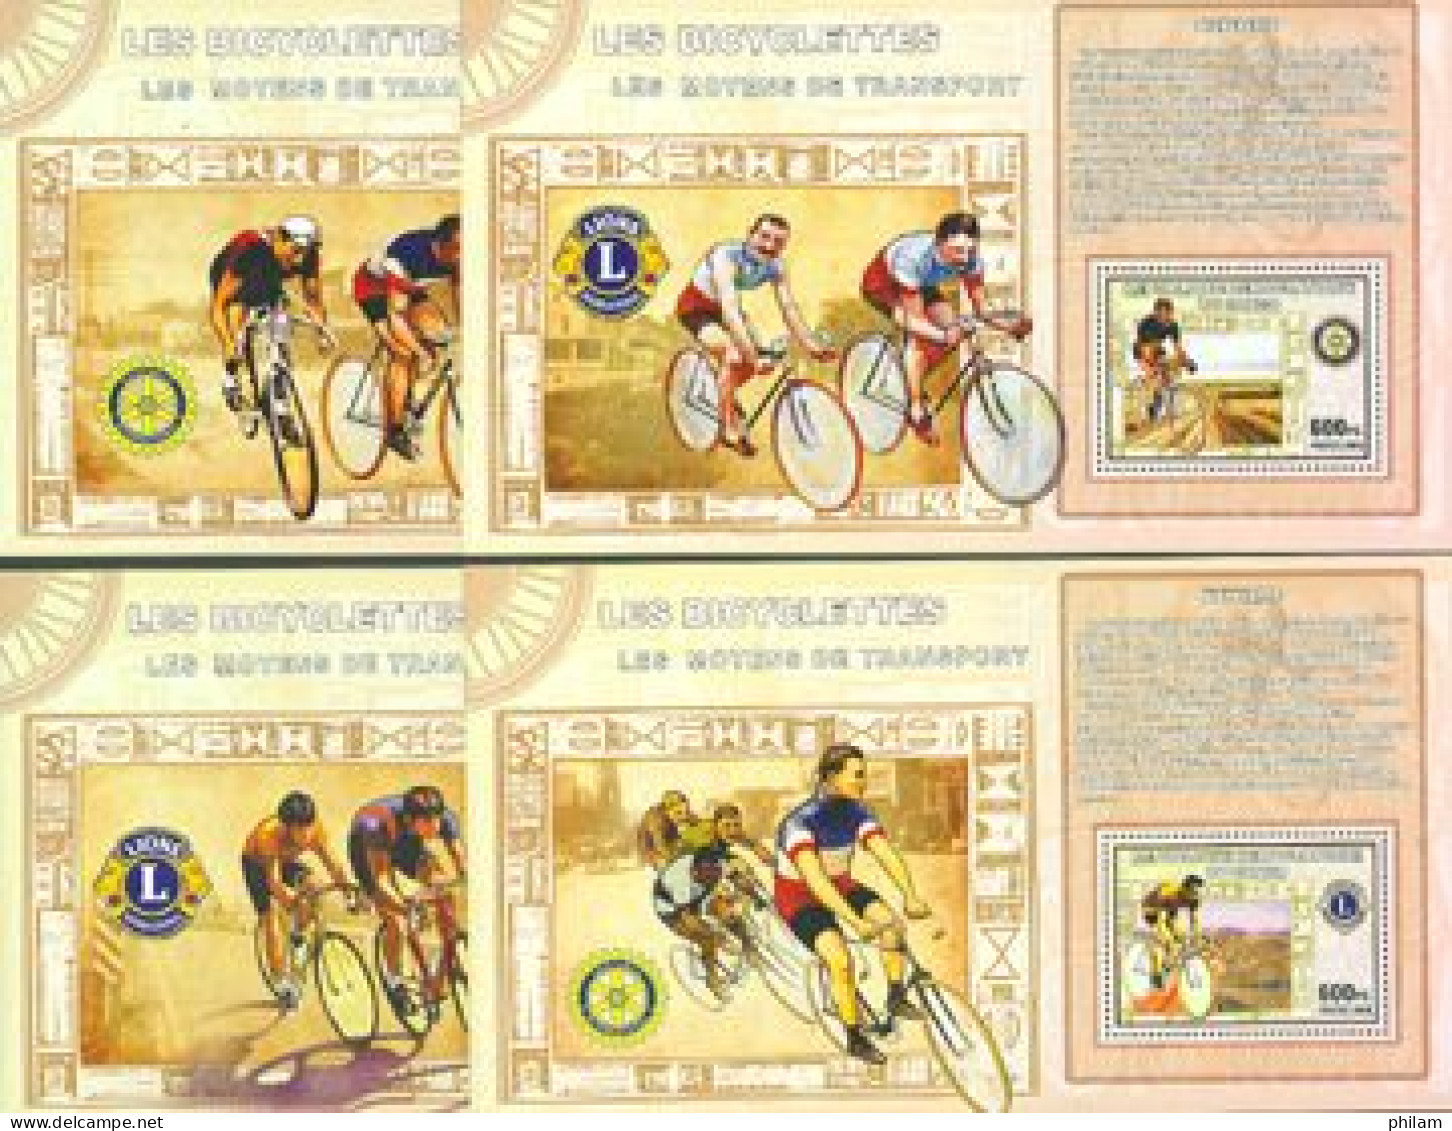 CONGO KINSHASA 2006 - Les Bicyclettes - Lions Club Et Rotary - 4 BF - Ciclismo